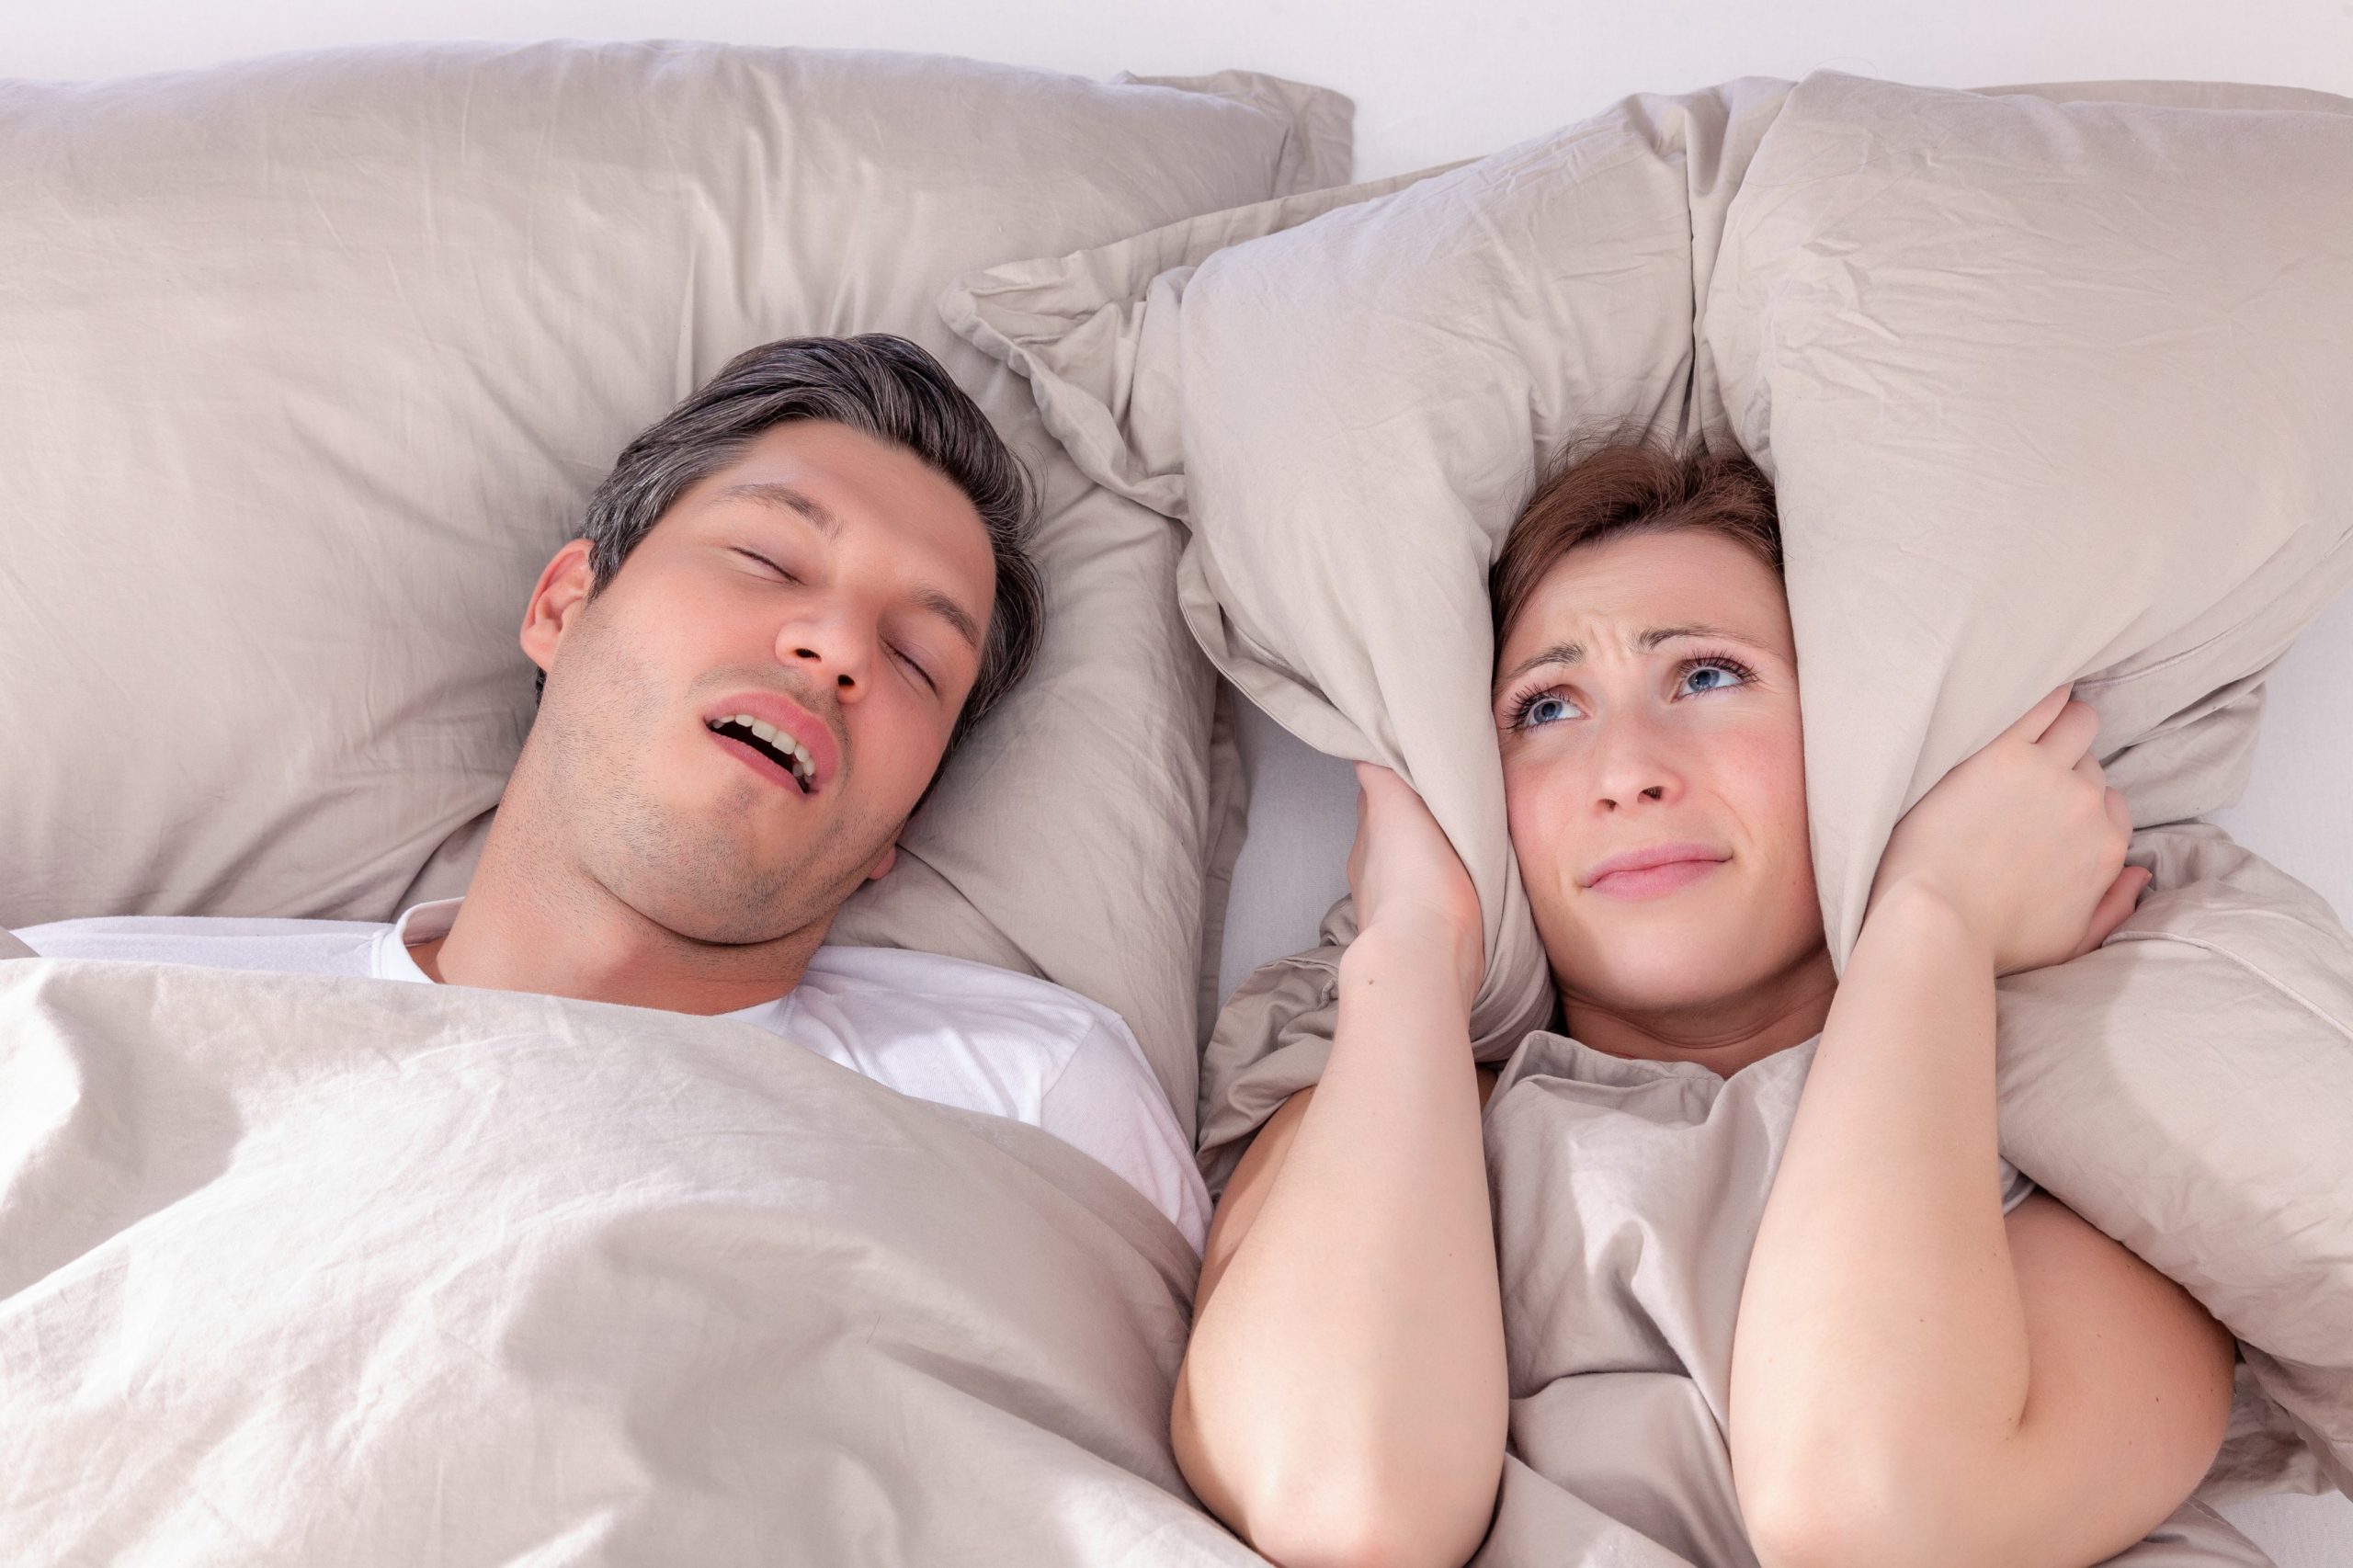 A realistic way to treat sleep apnea